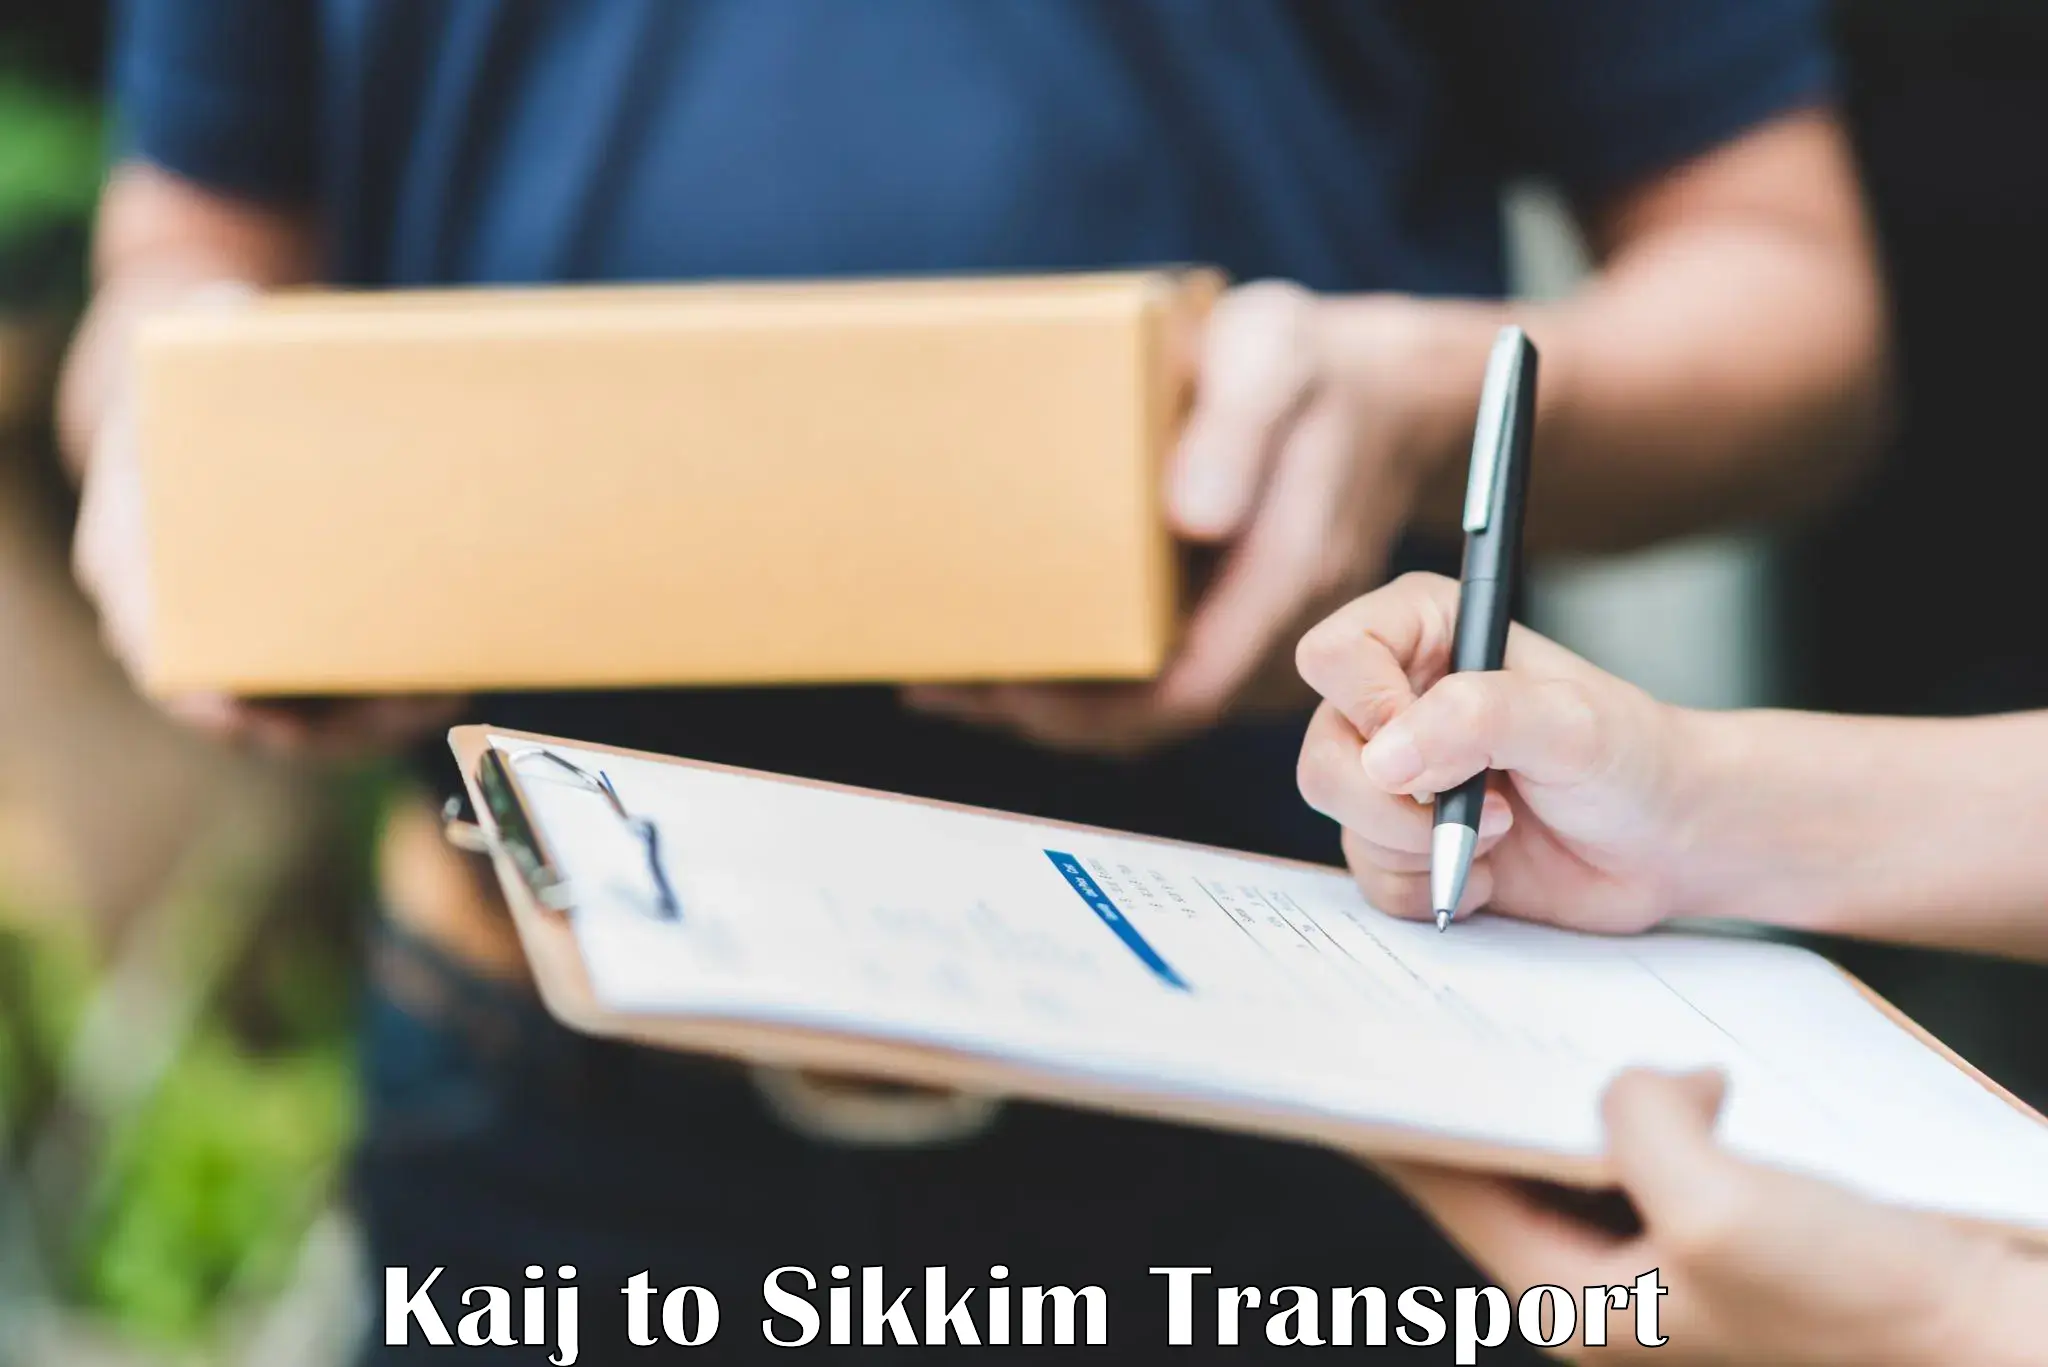 Transport in sharing Kaij to Pelling